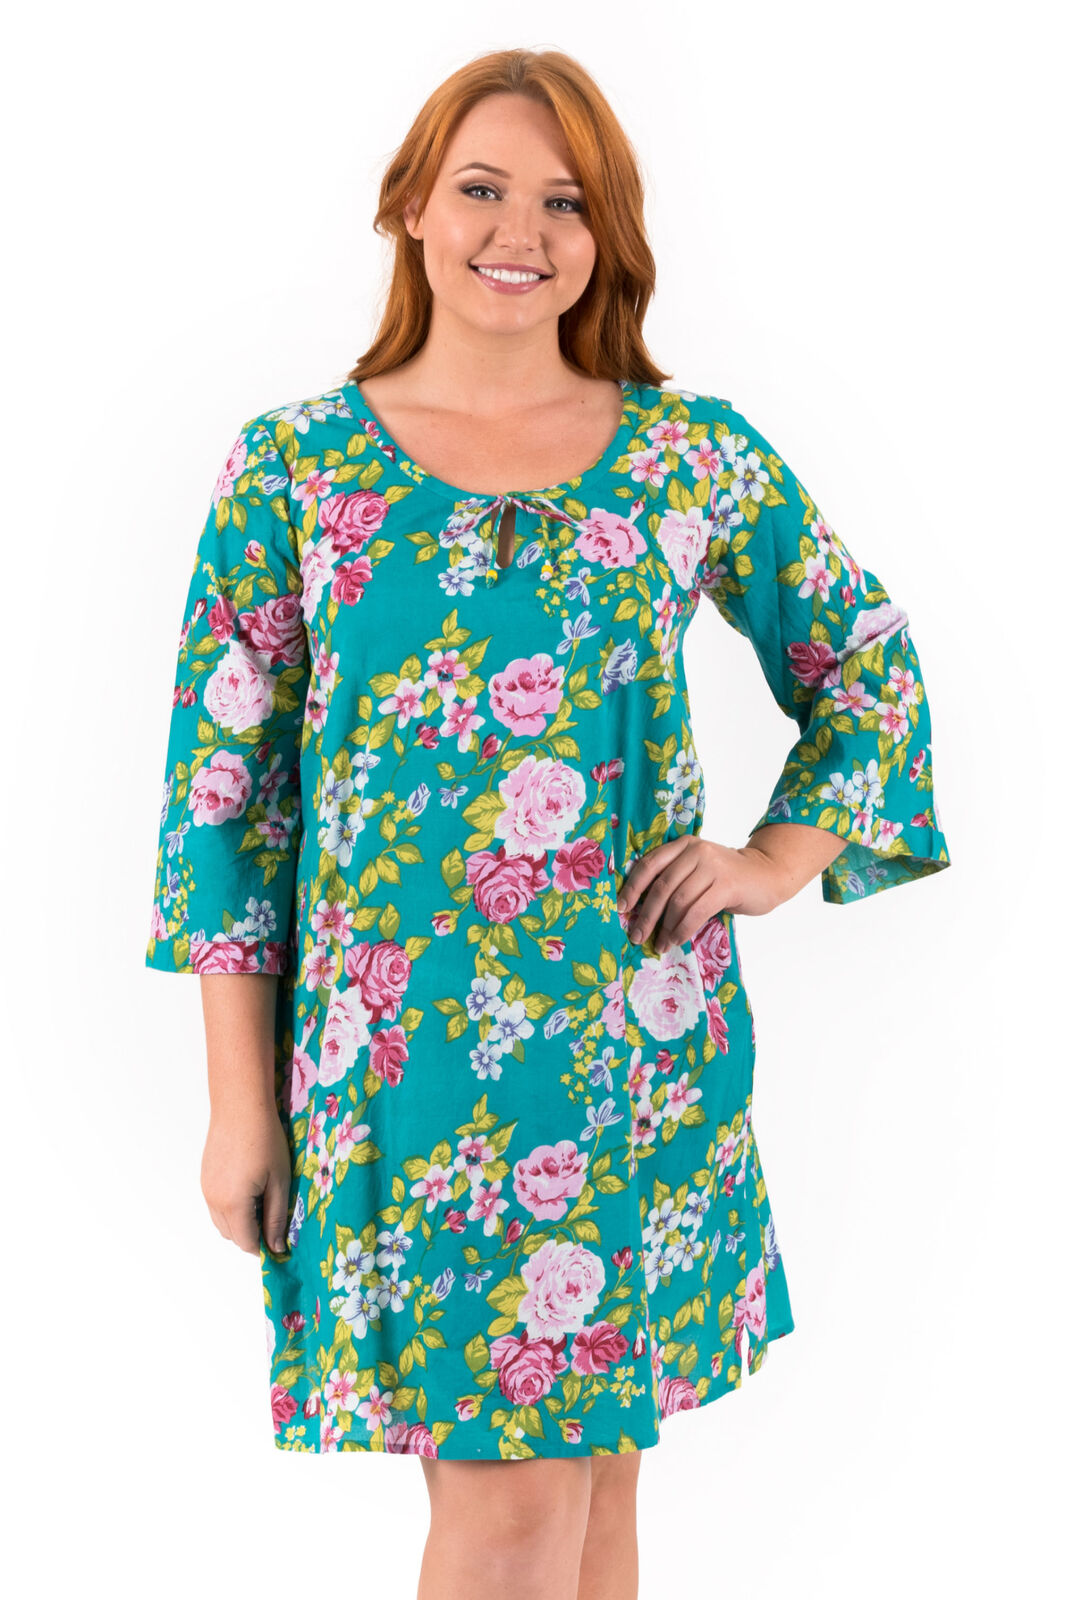 Cotton Tunic Dress | Aloha Teal Floral | XS - 3XL